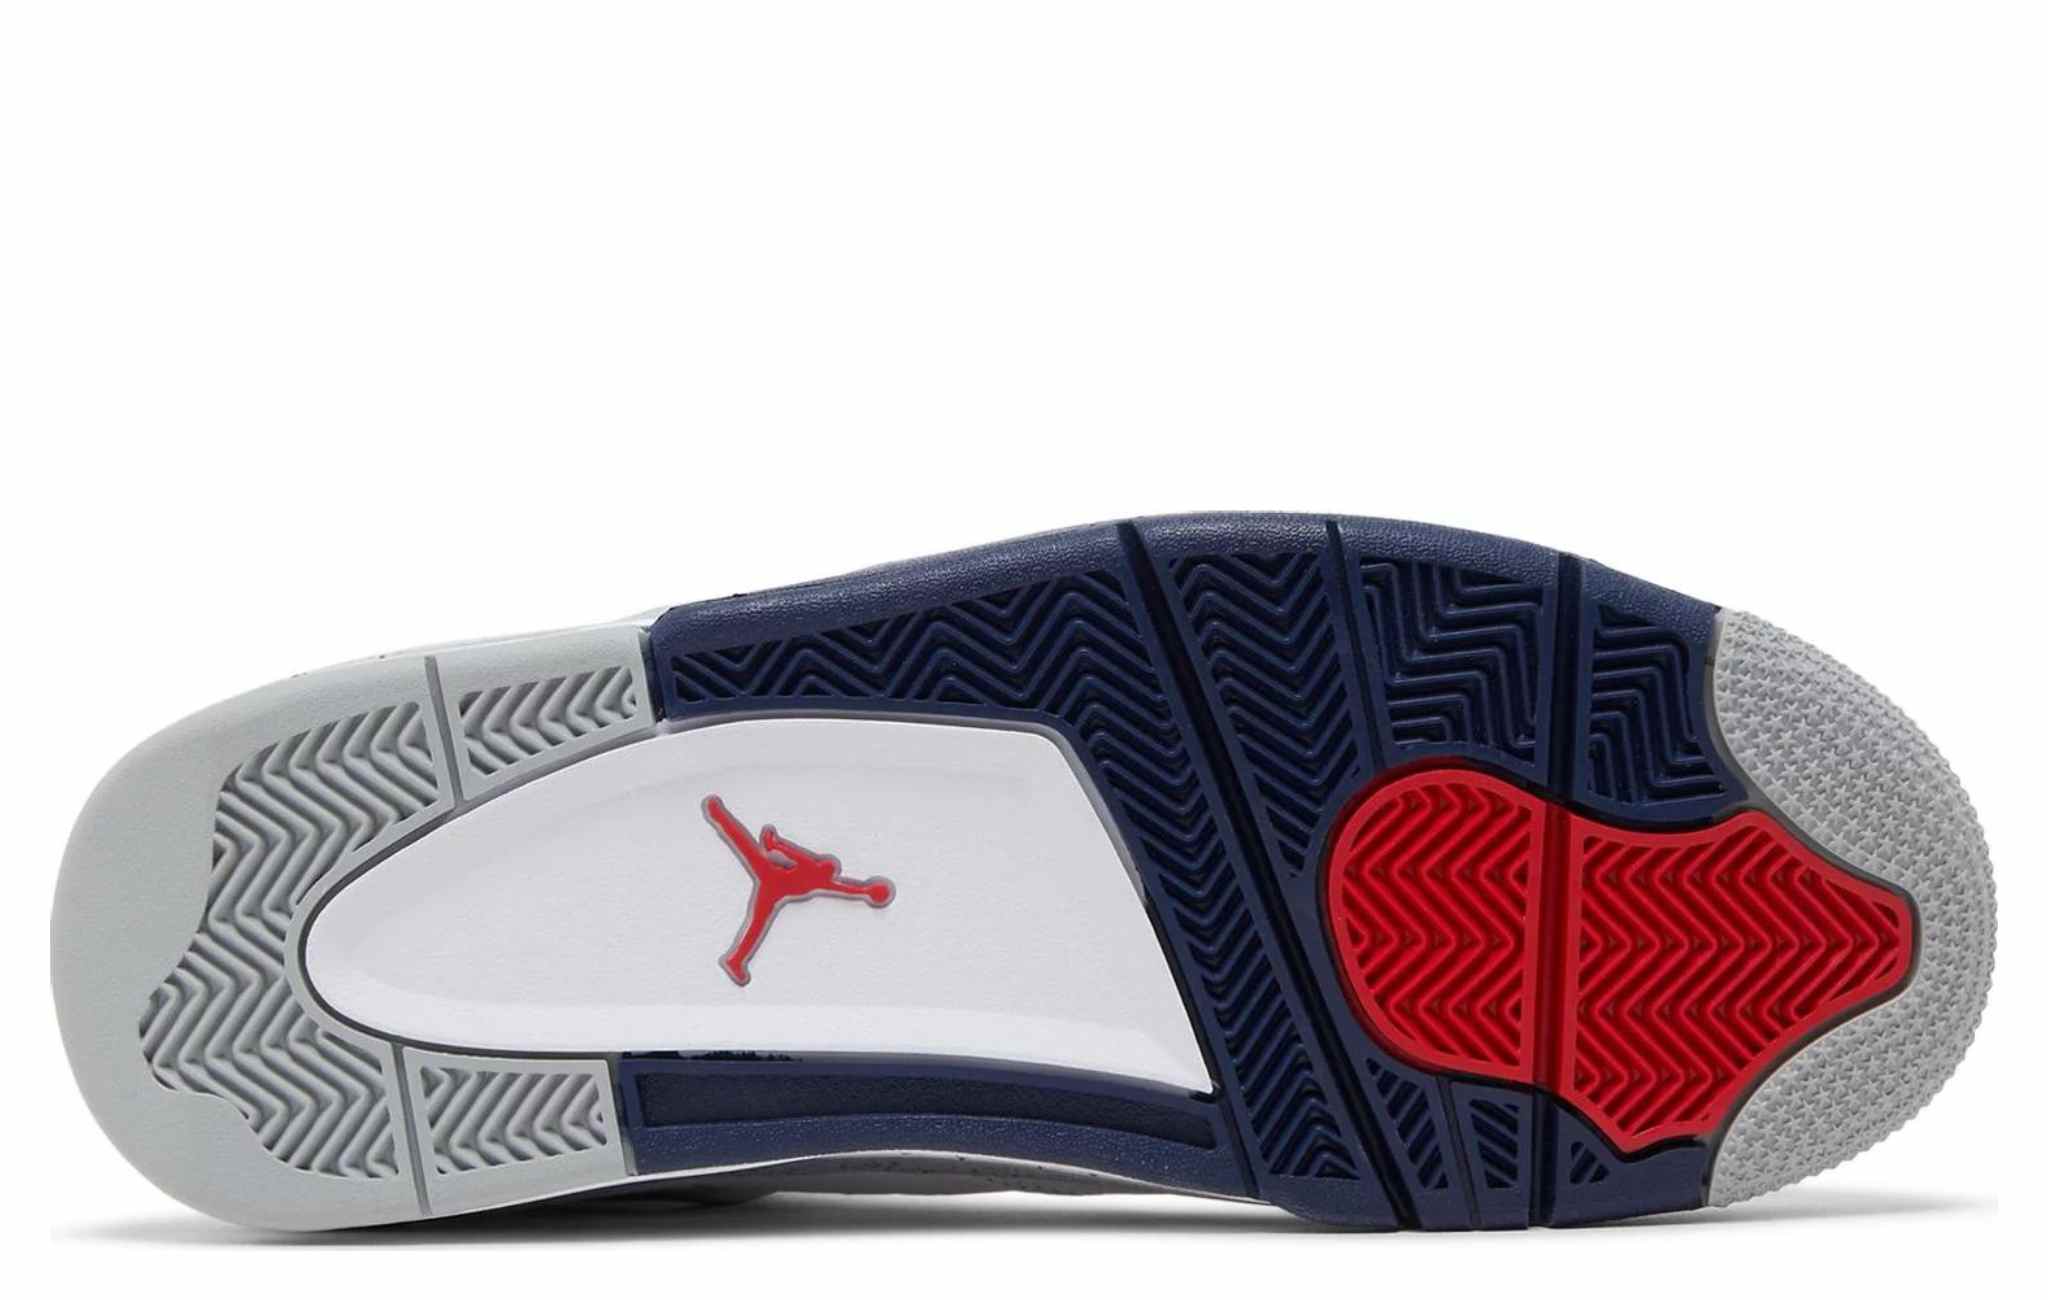 Nike Air Jordan 4 Retro 'Midnight Navy'